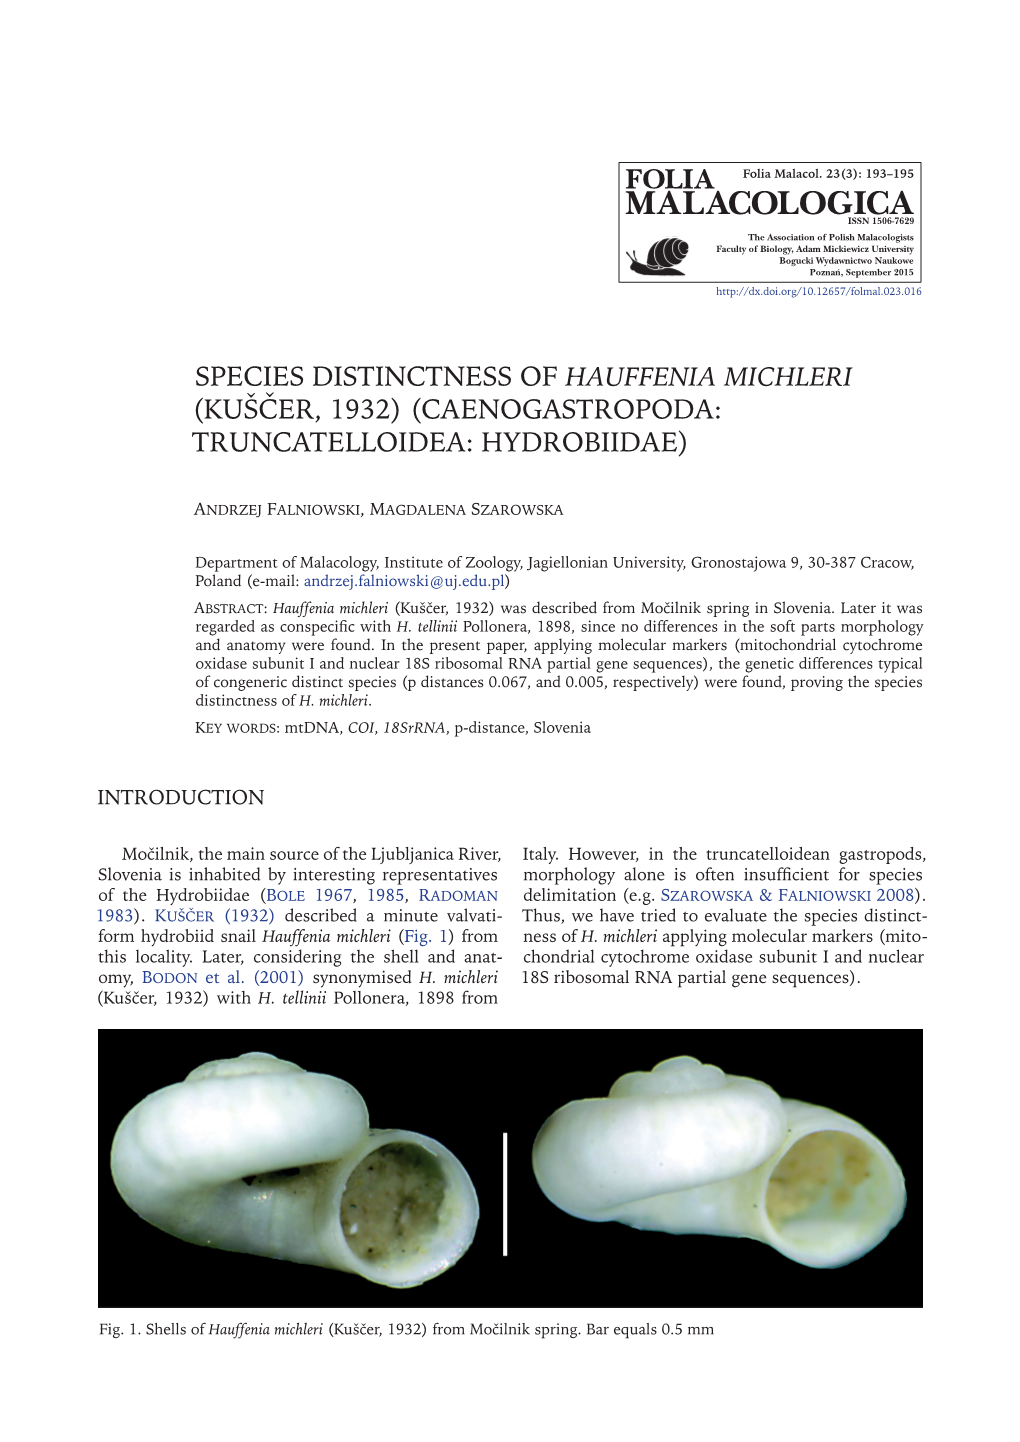 Species Distinctness of Hauffenia Michleri (Kuščer, 1932) (Caenogastropoda: Truncatelloidea: Hydrobiidae)